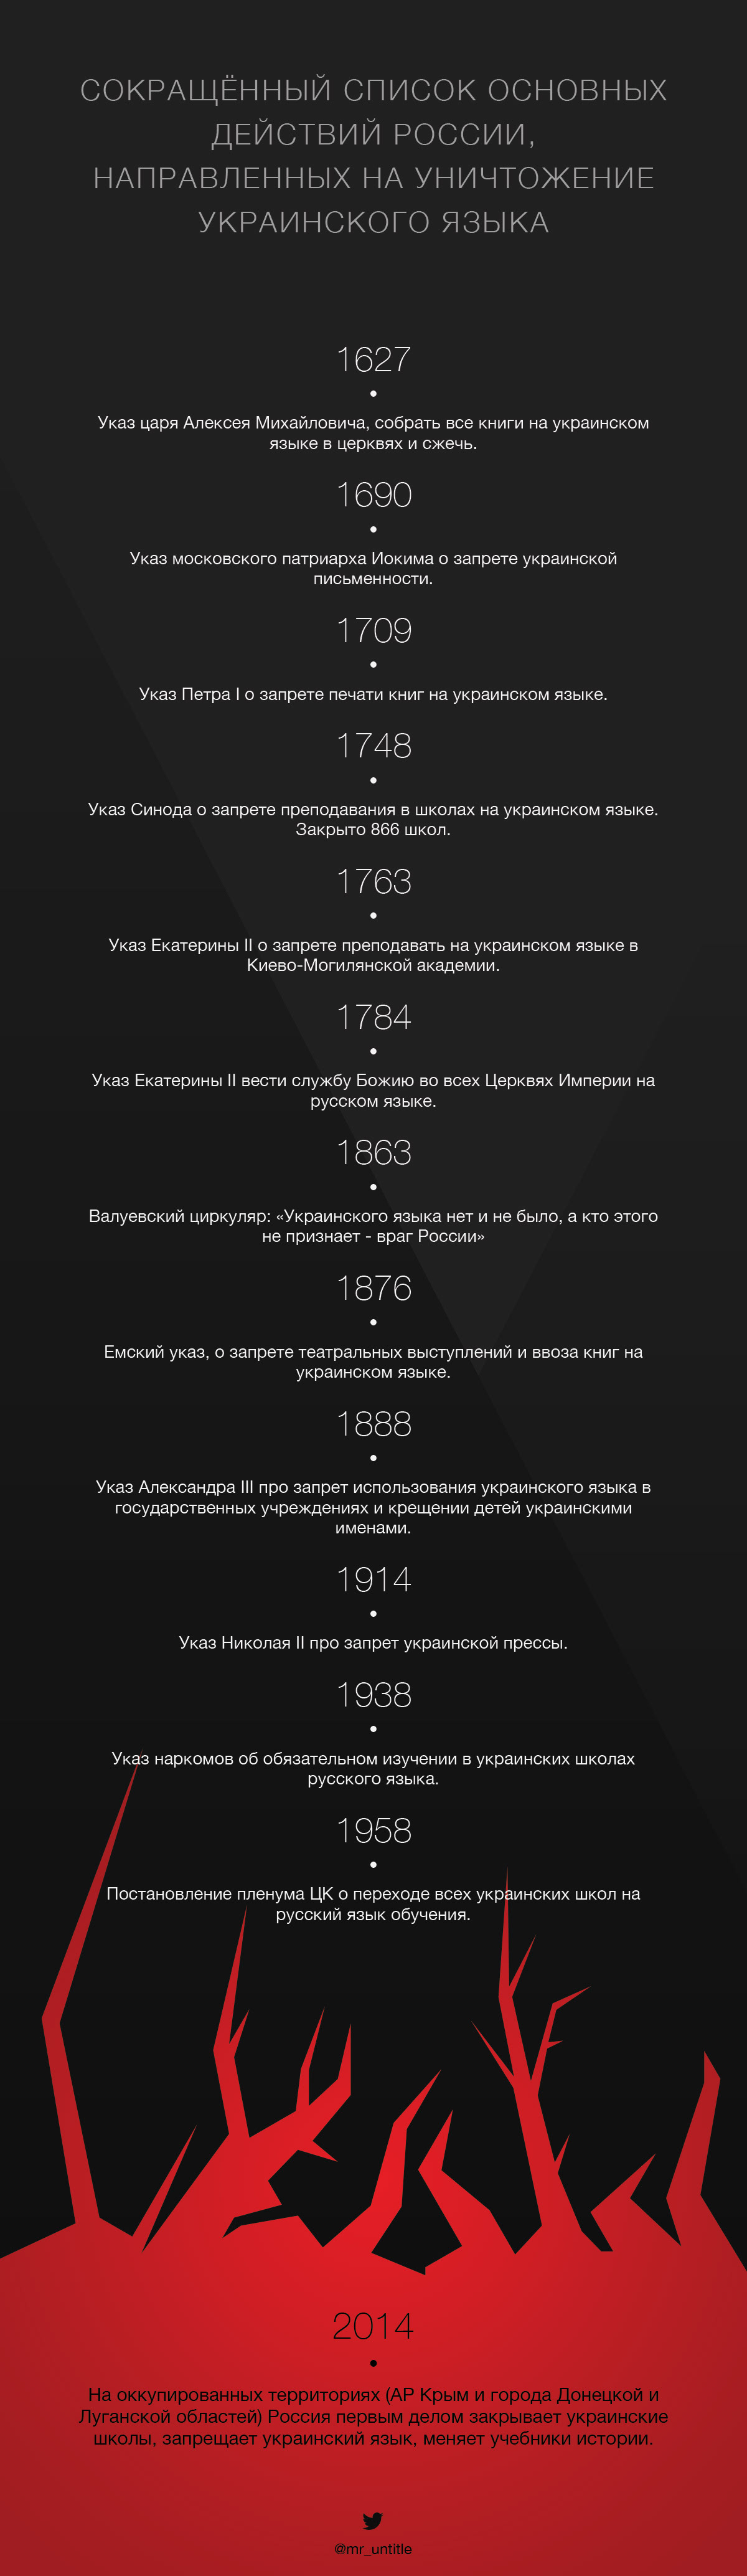 language ukrainian history infographic